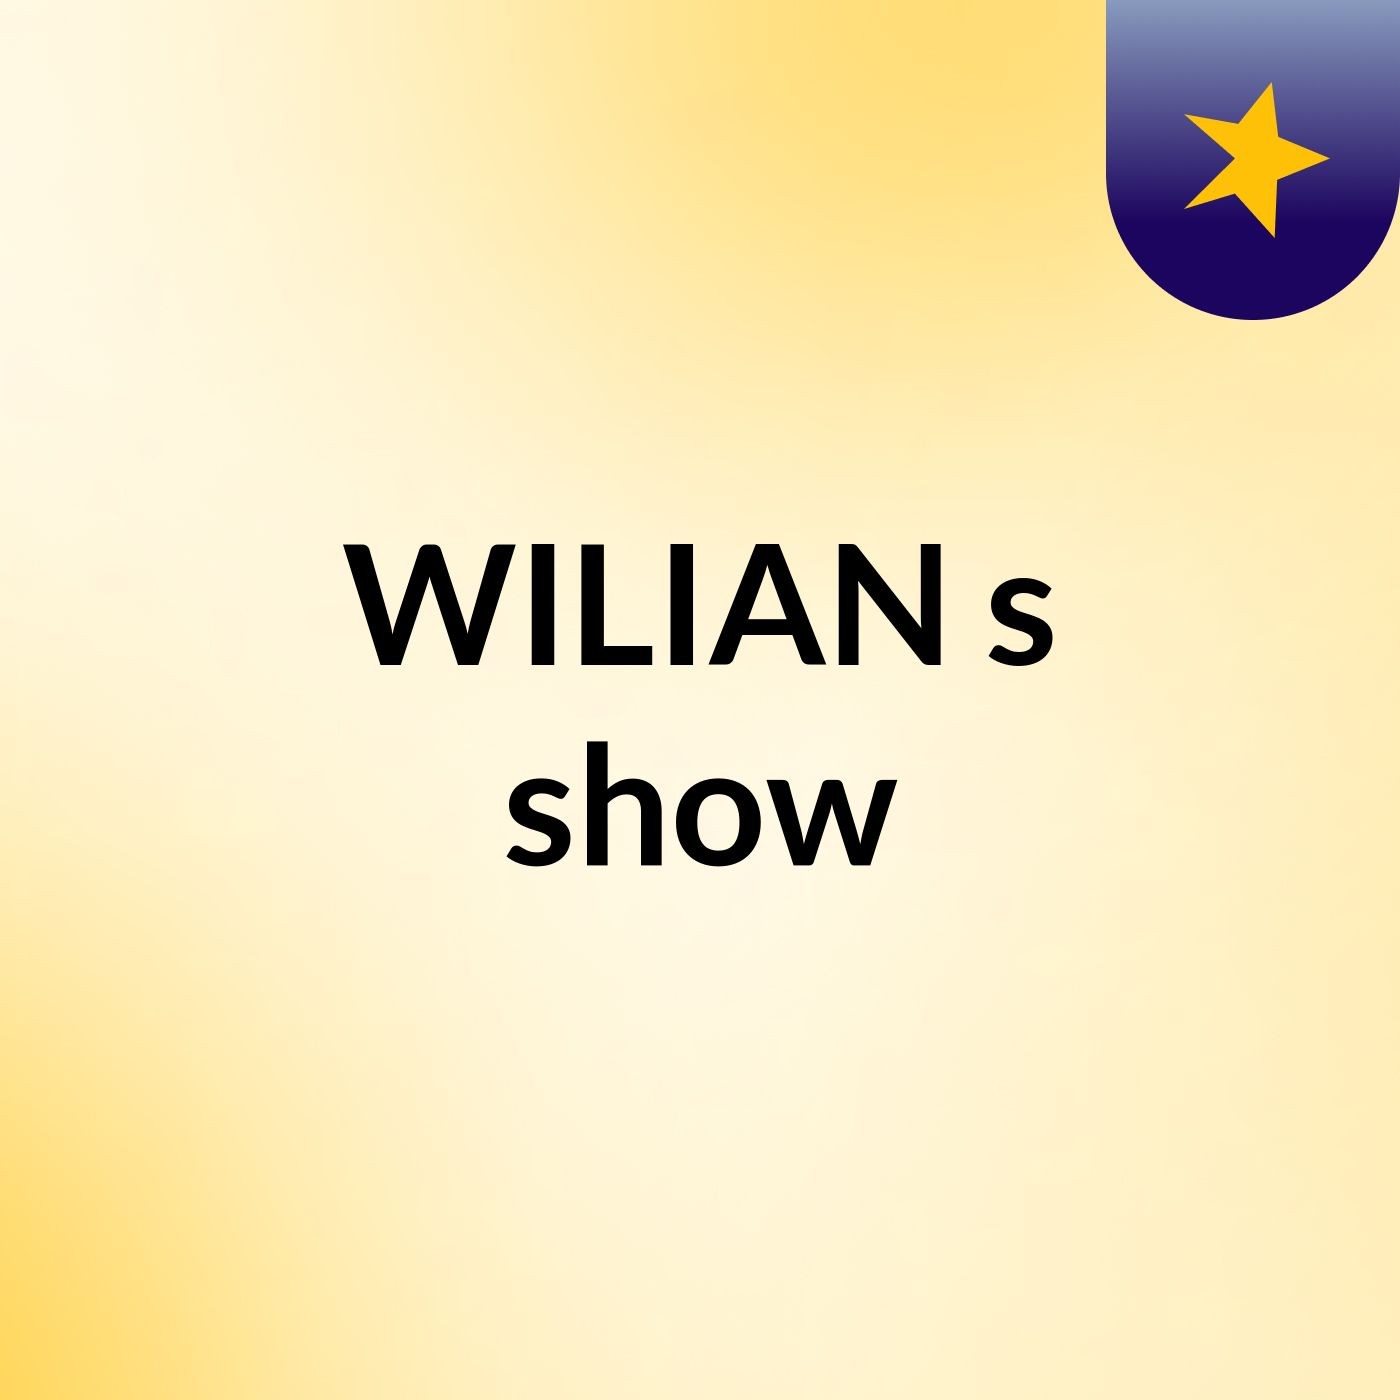 WILIAN's show